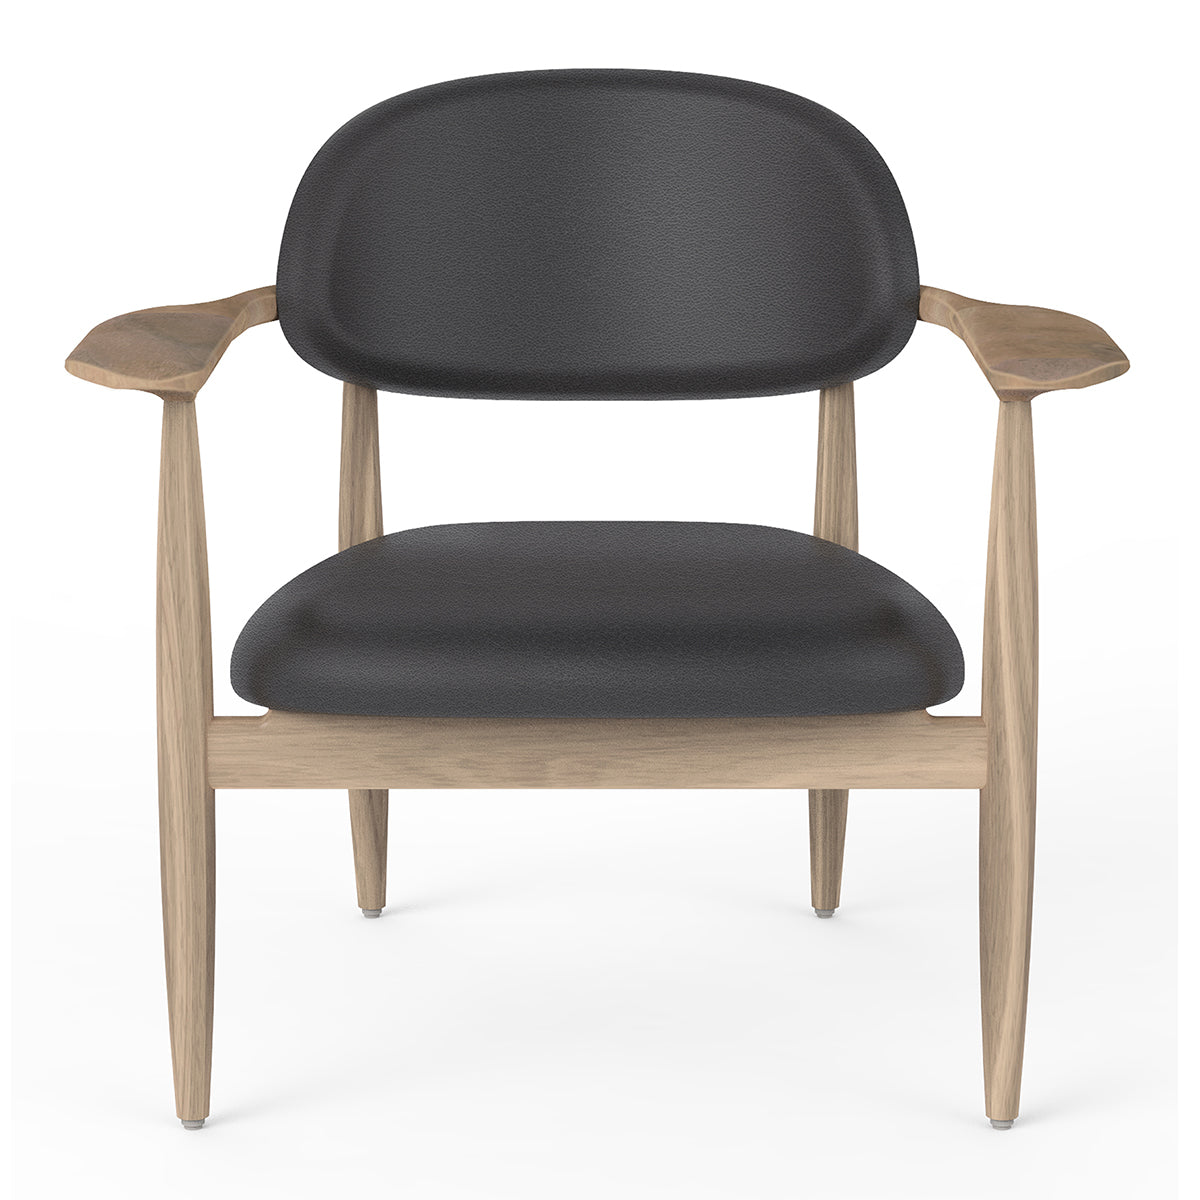 Slow Lounge Chair - Stellar Works - Do Shop